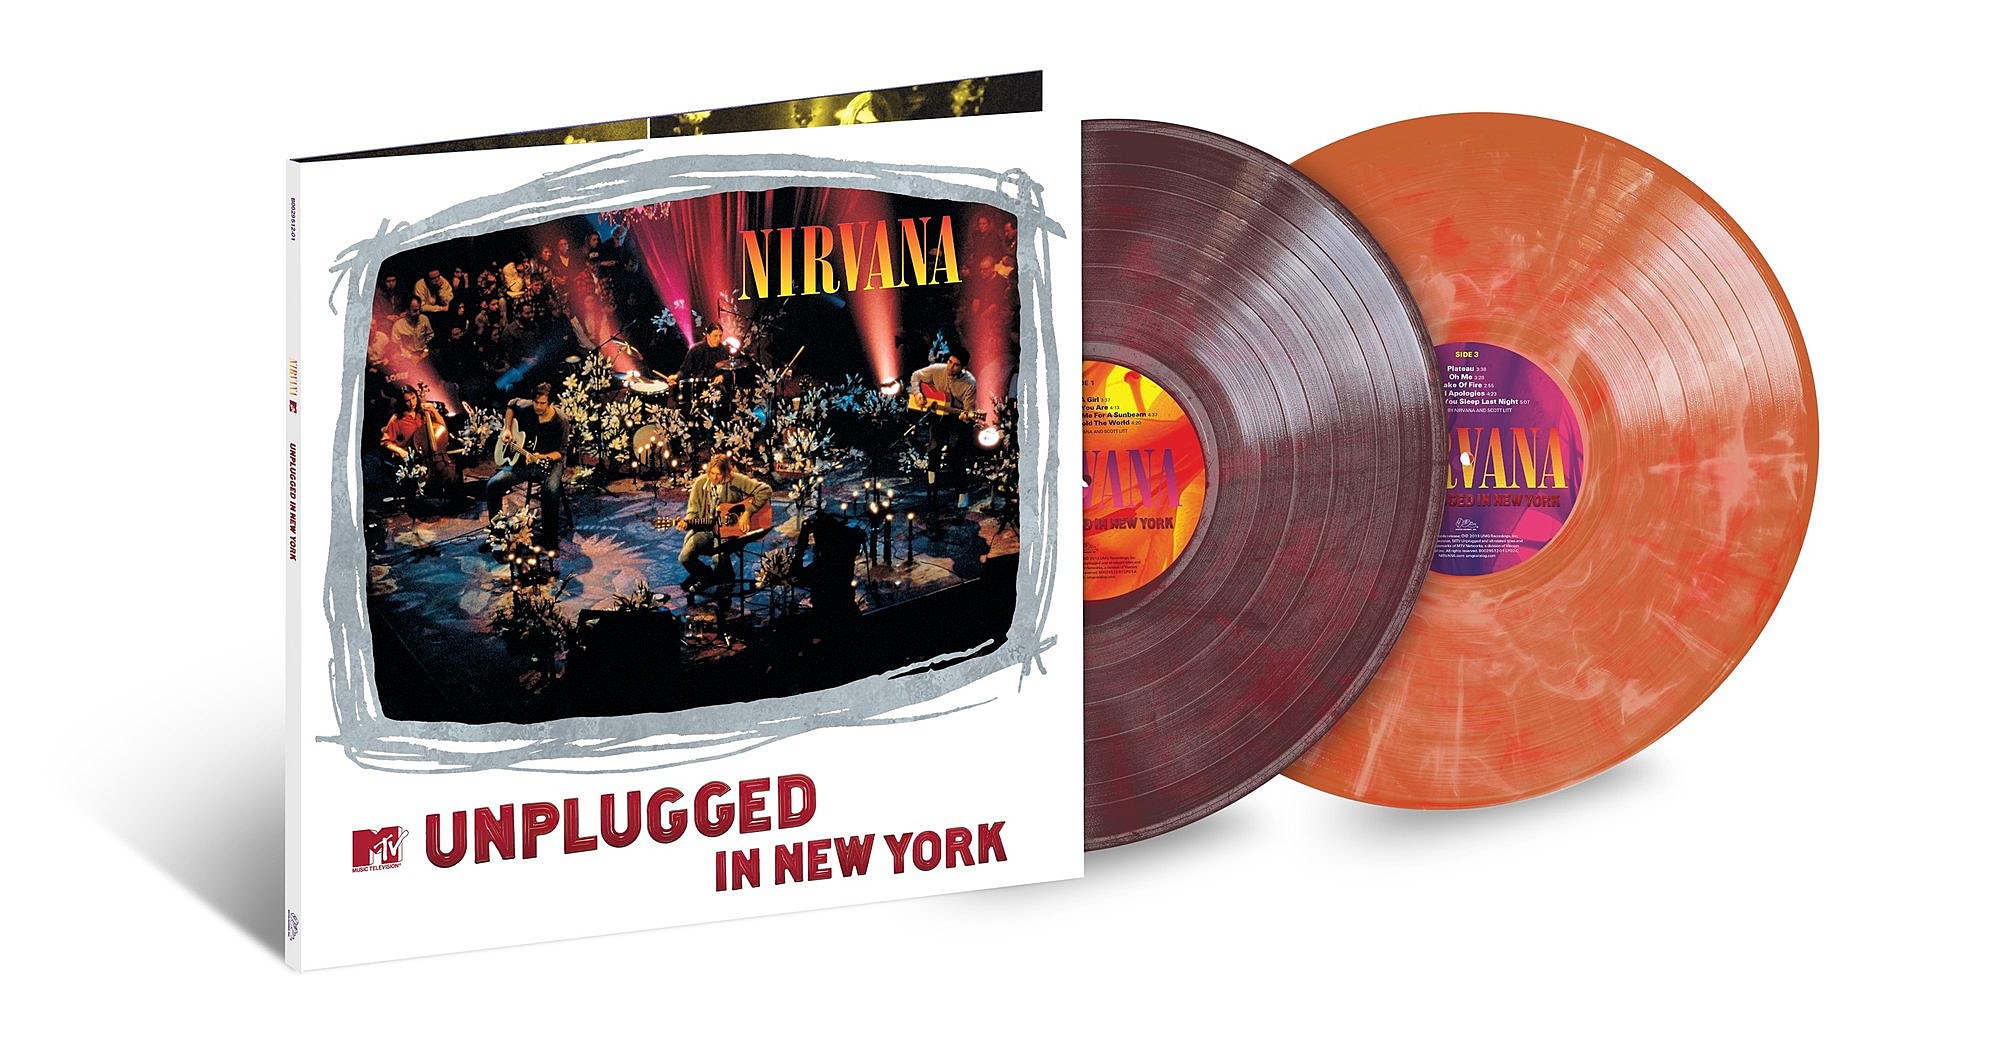 Nirvana mtv unplugged. Nirvana Unplugged in New York 1994. 1994 - MTV Unplugged in New York. Нирвана Unplugged in New York винил. Nirvana Unplugged обложка.